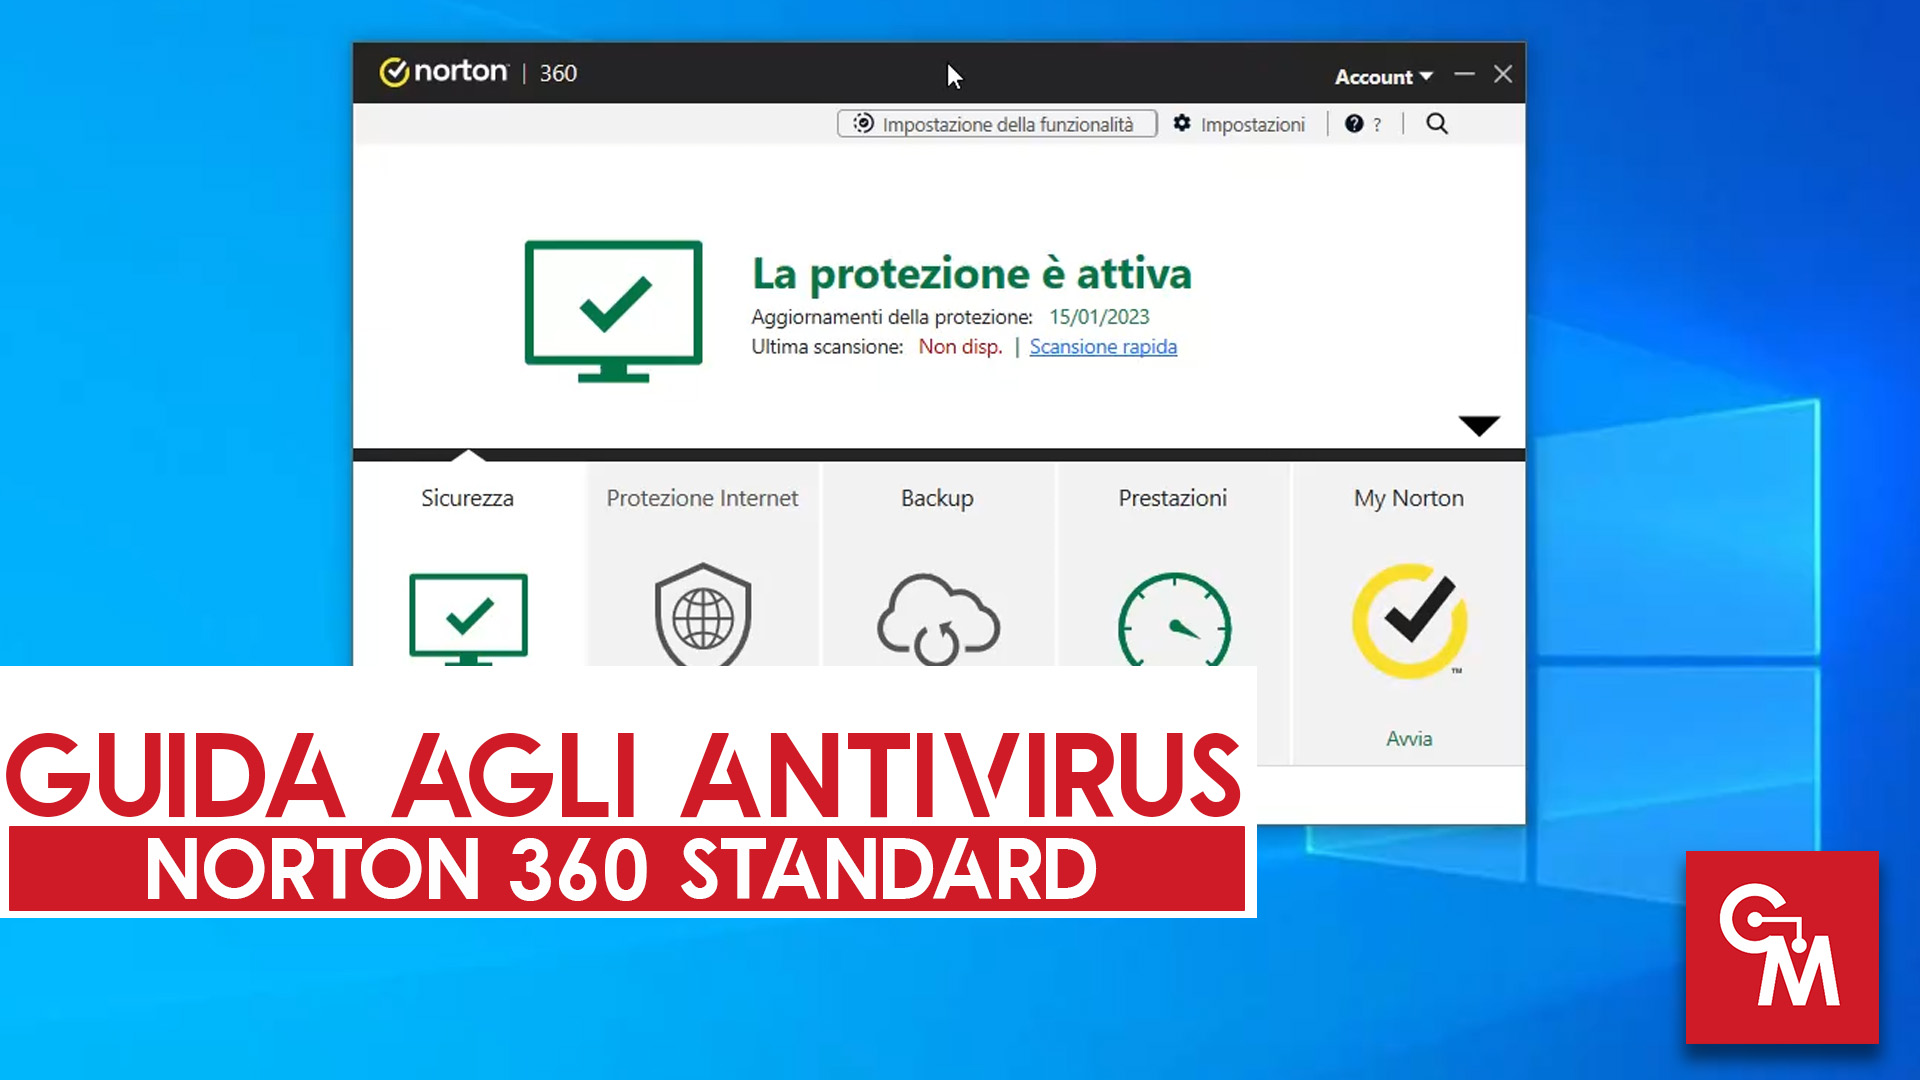 Guida Agli Antivirus - Norton 360 Standard